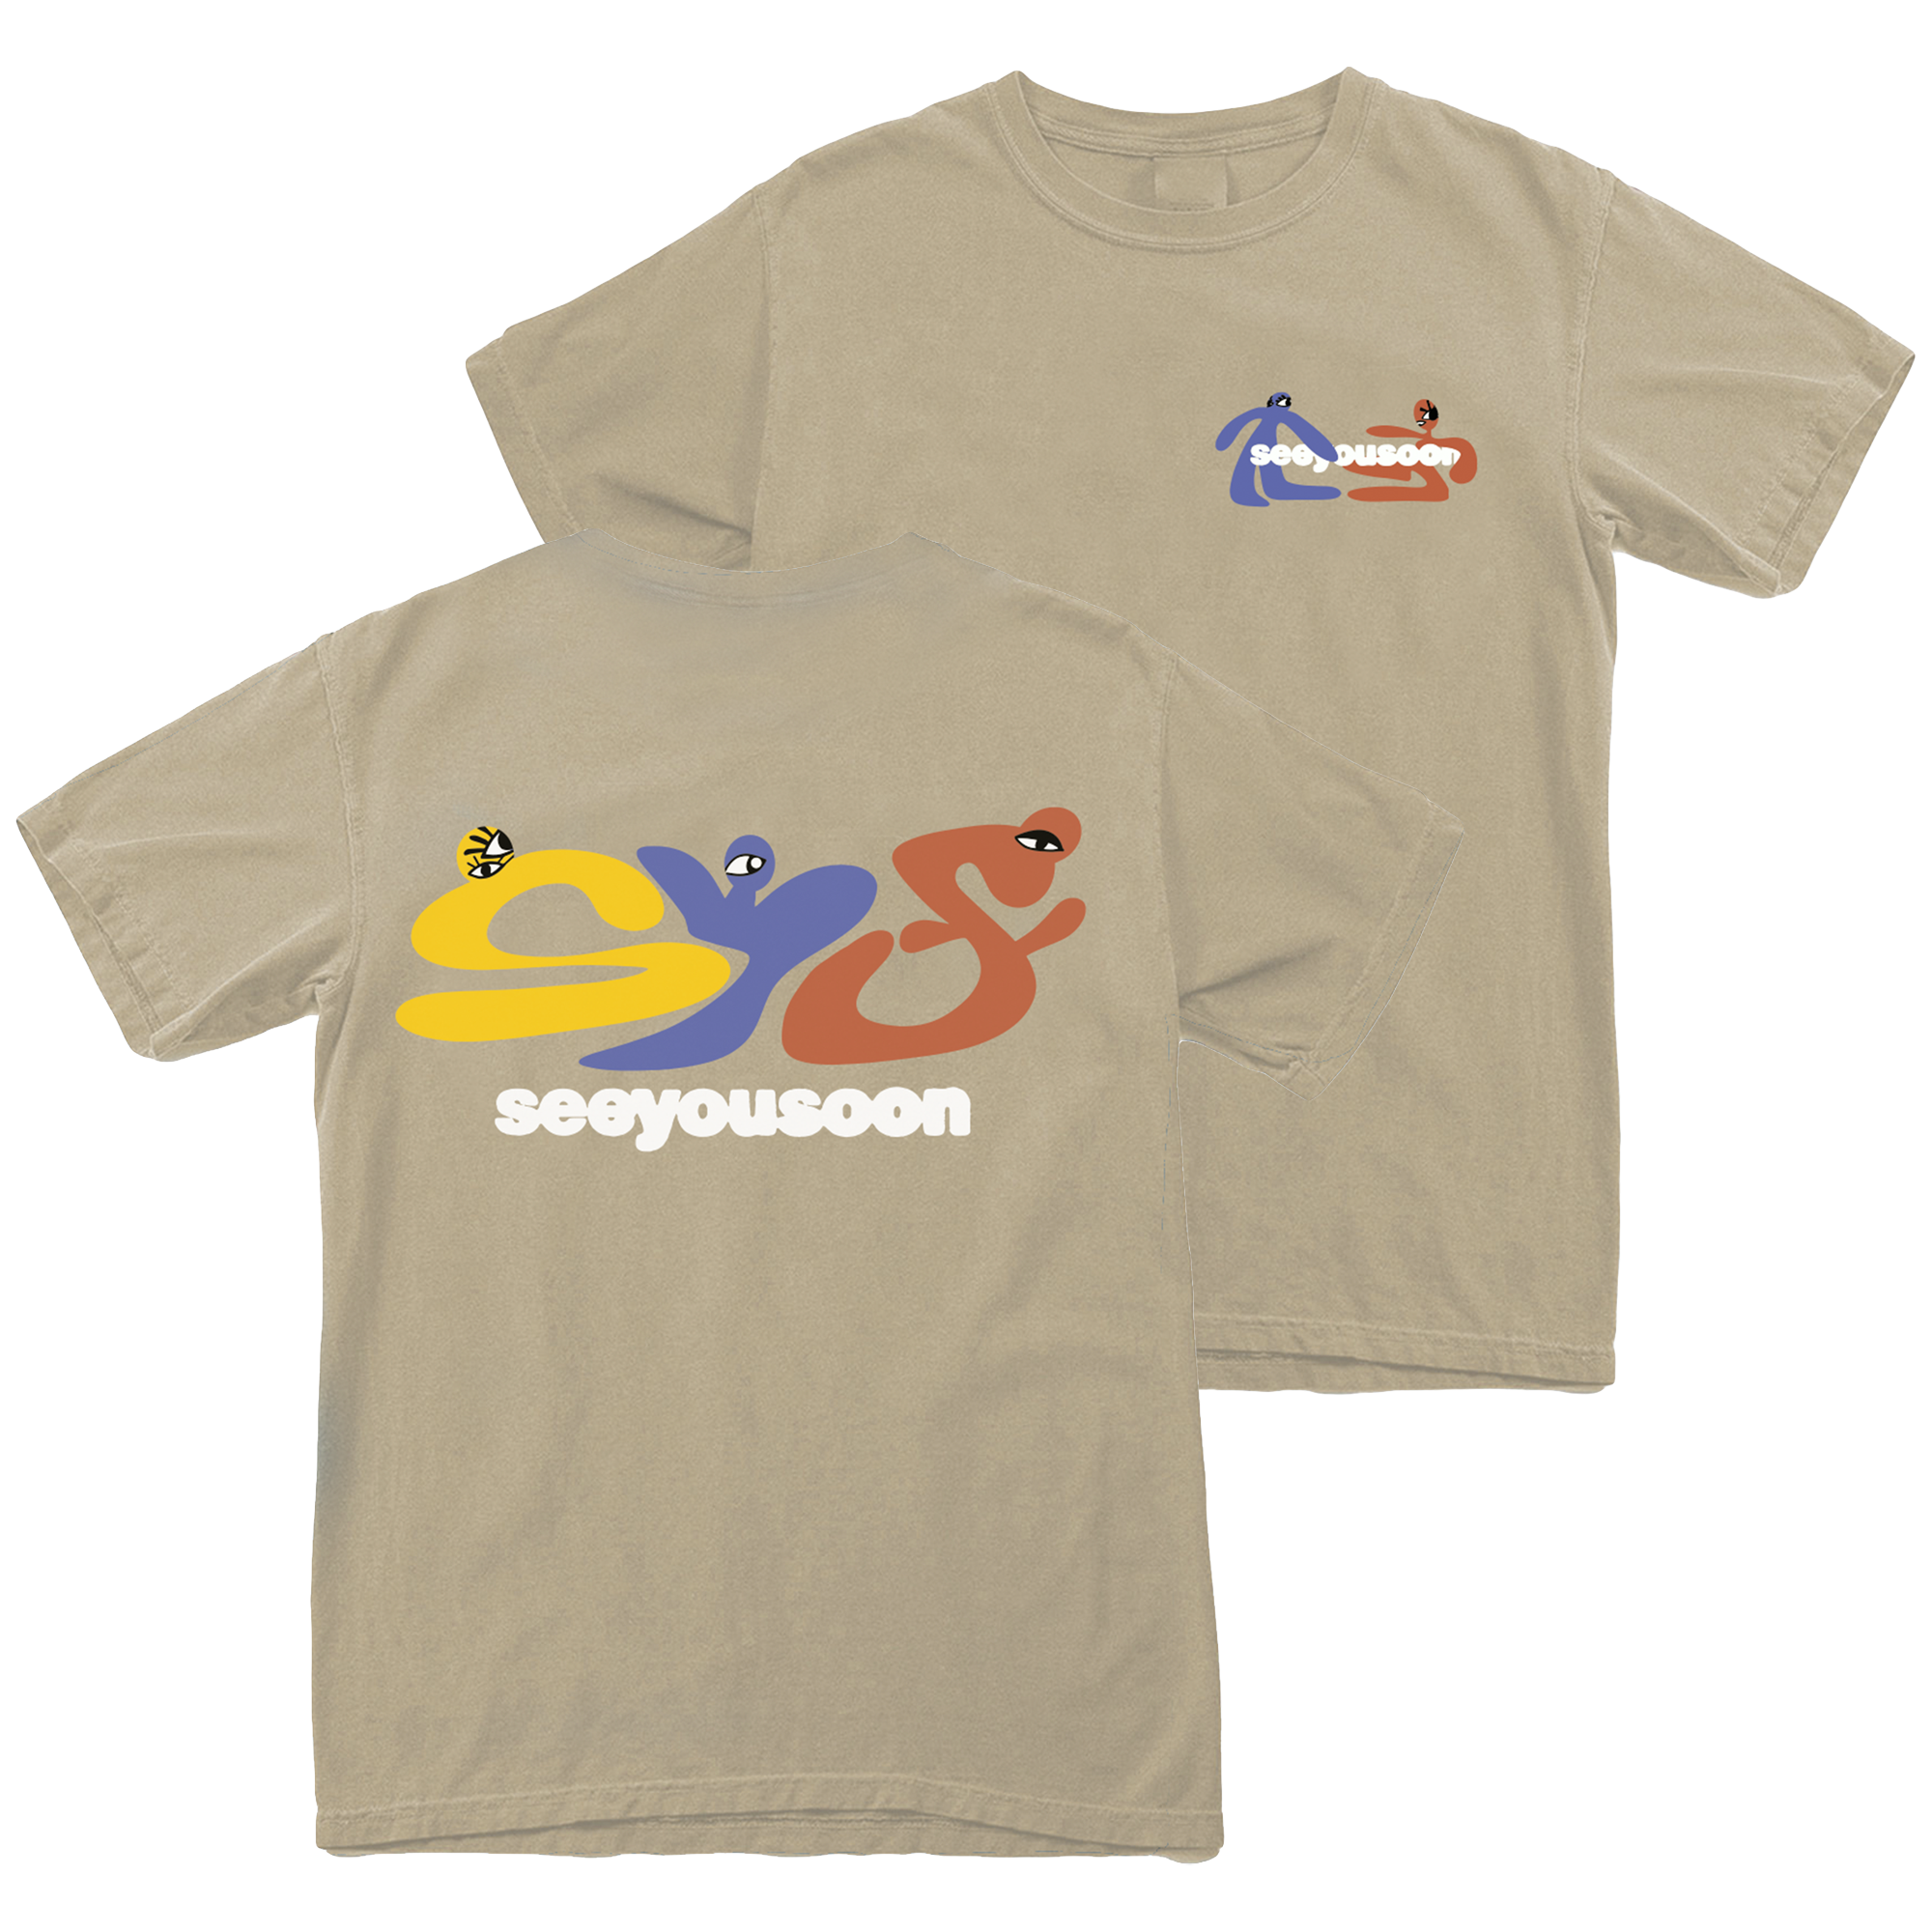 seeyousoon - SYS Shirt